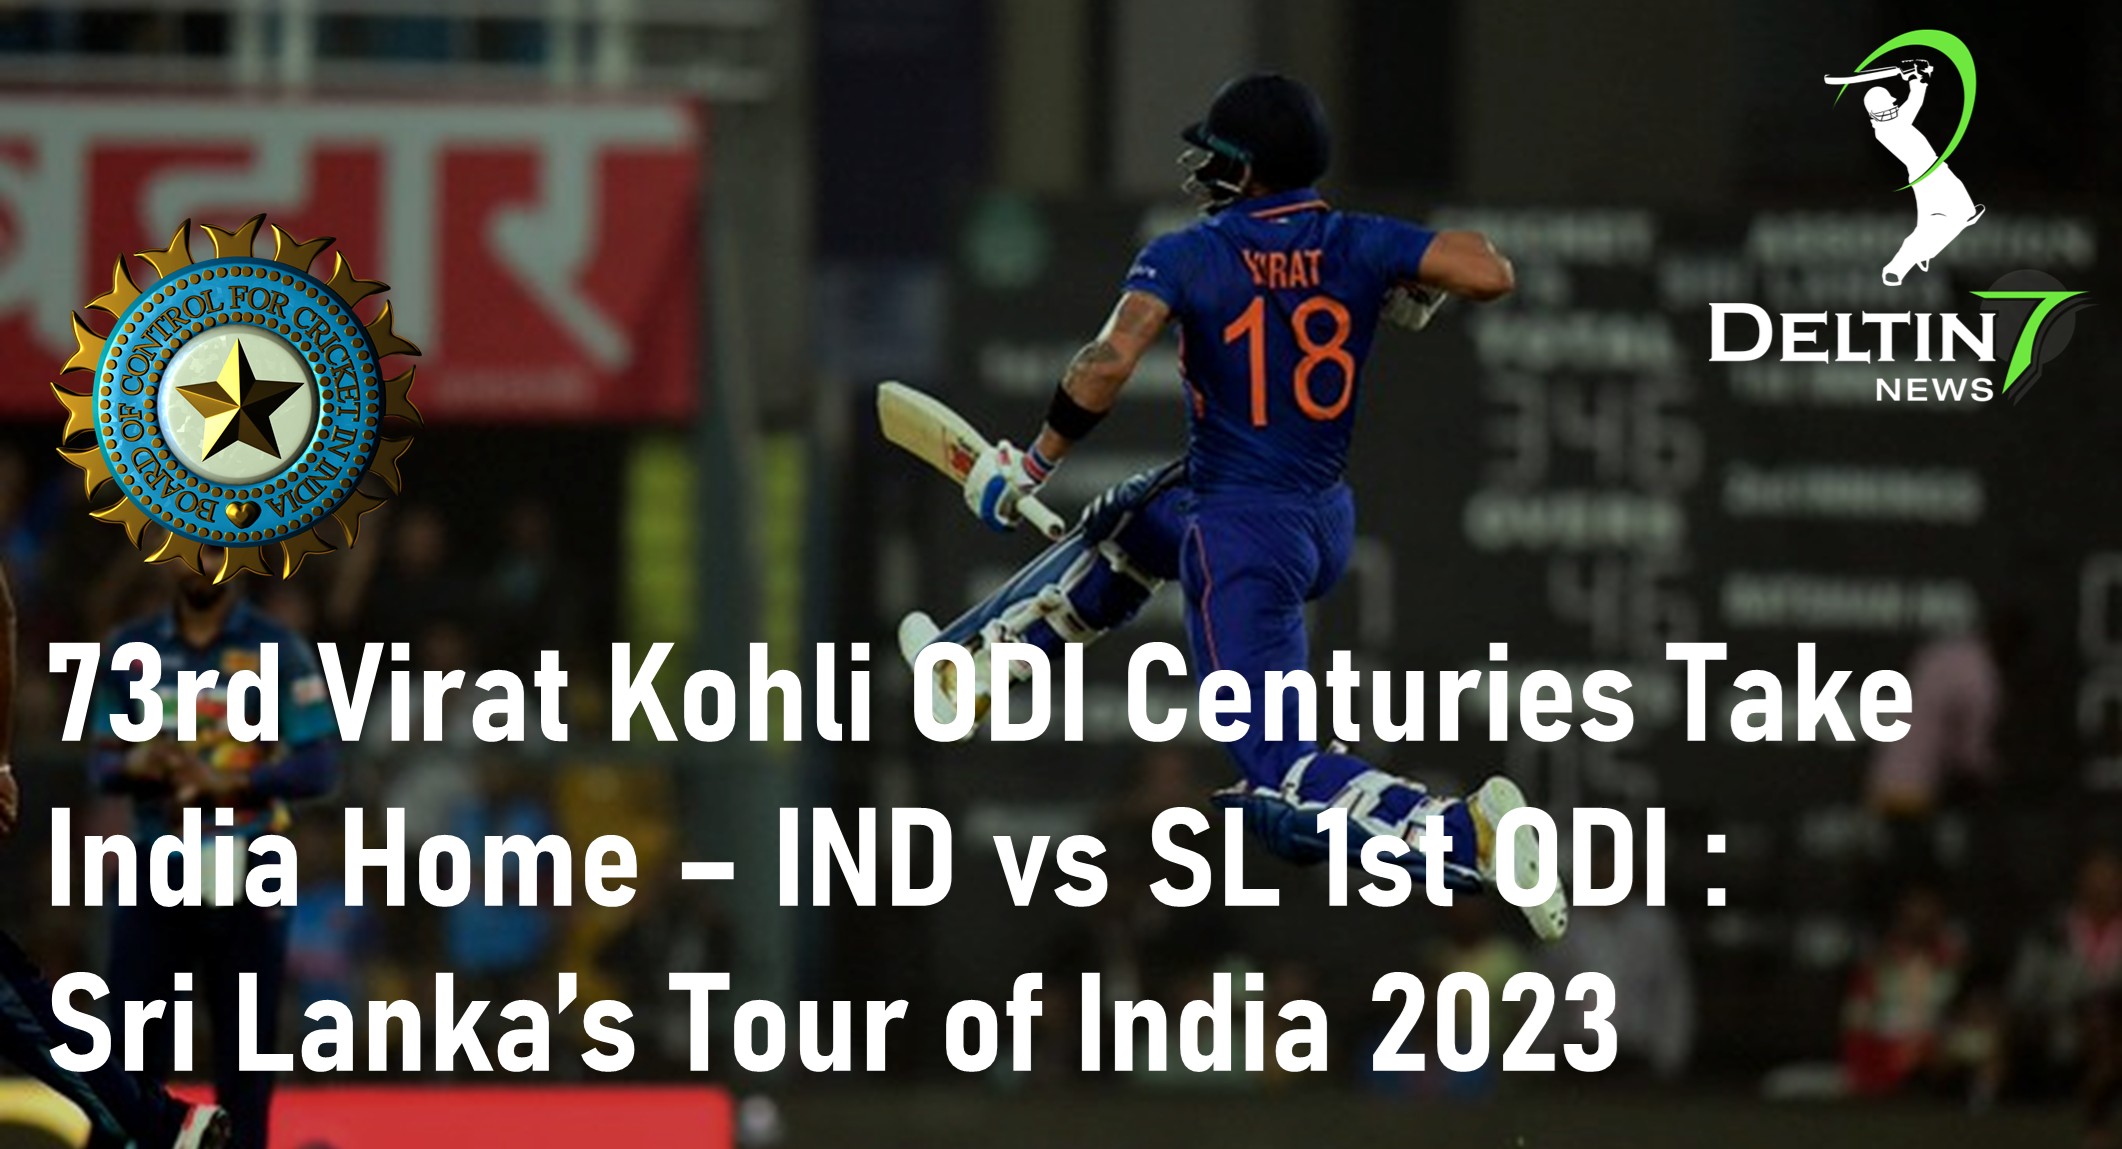 <strong>Virat Kohli ODI Centuries Take India Home, His 73rd International Centuries – India vs Sri Lanka 2023 1st ODI: Sri Lanka’s Tour of India 2023</strong>